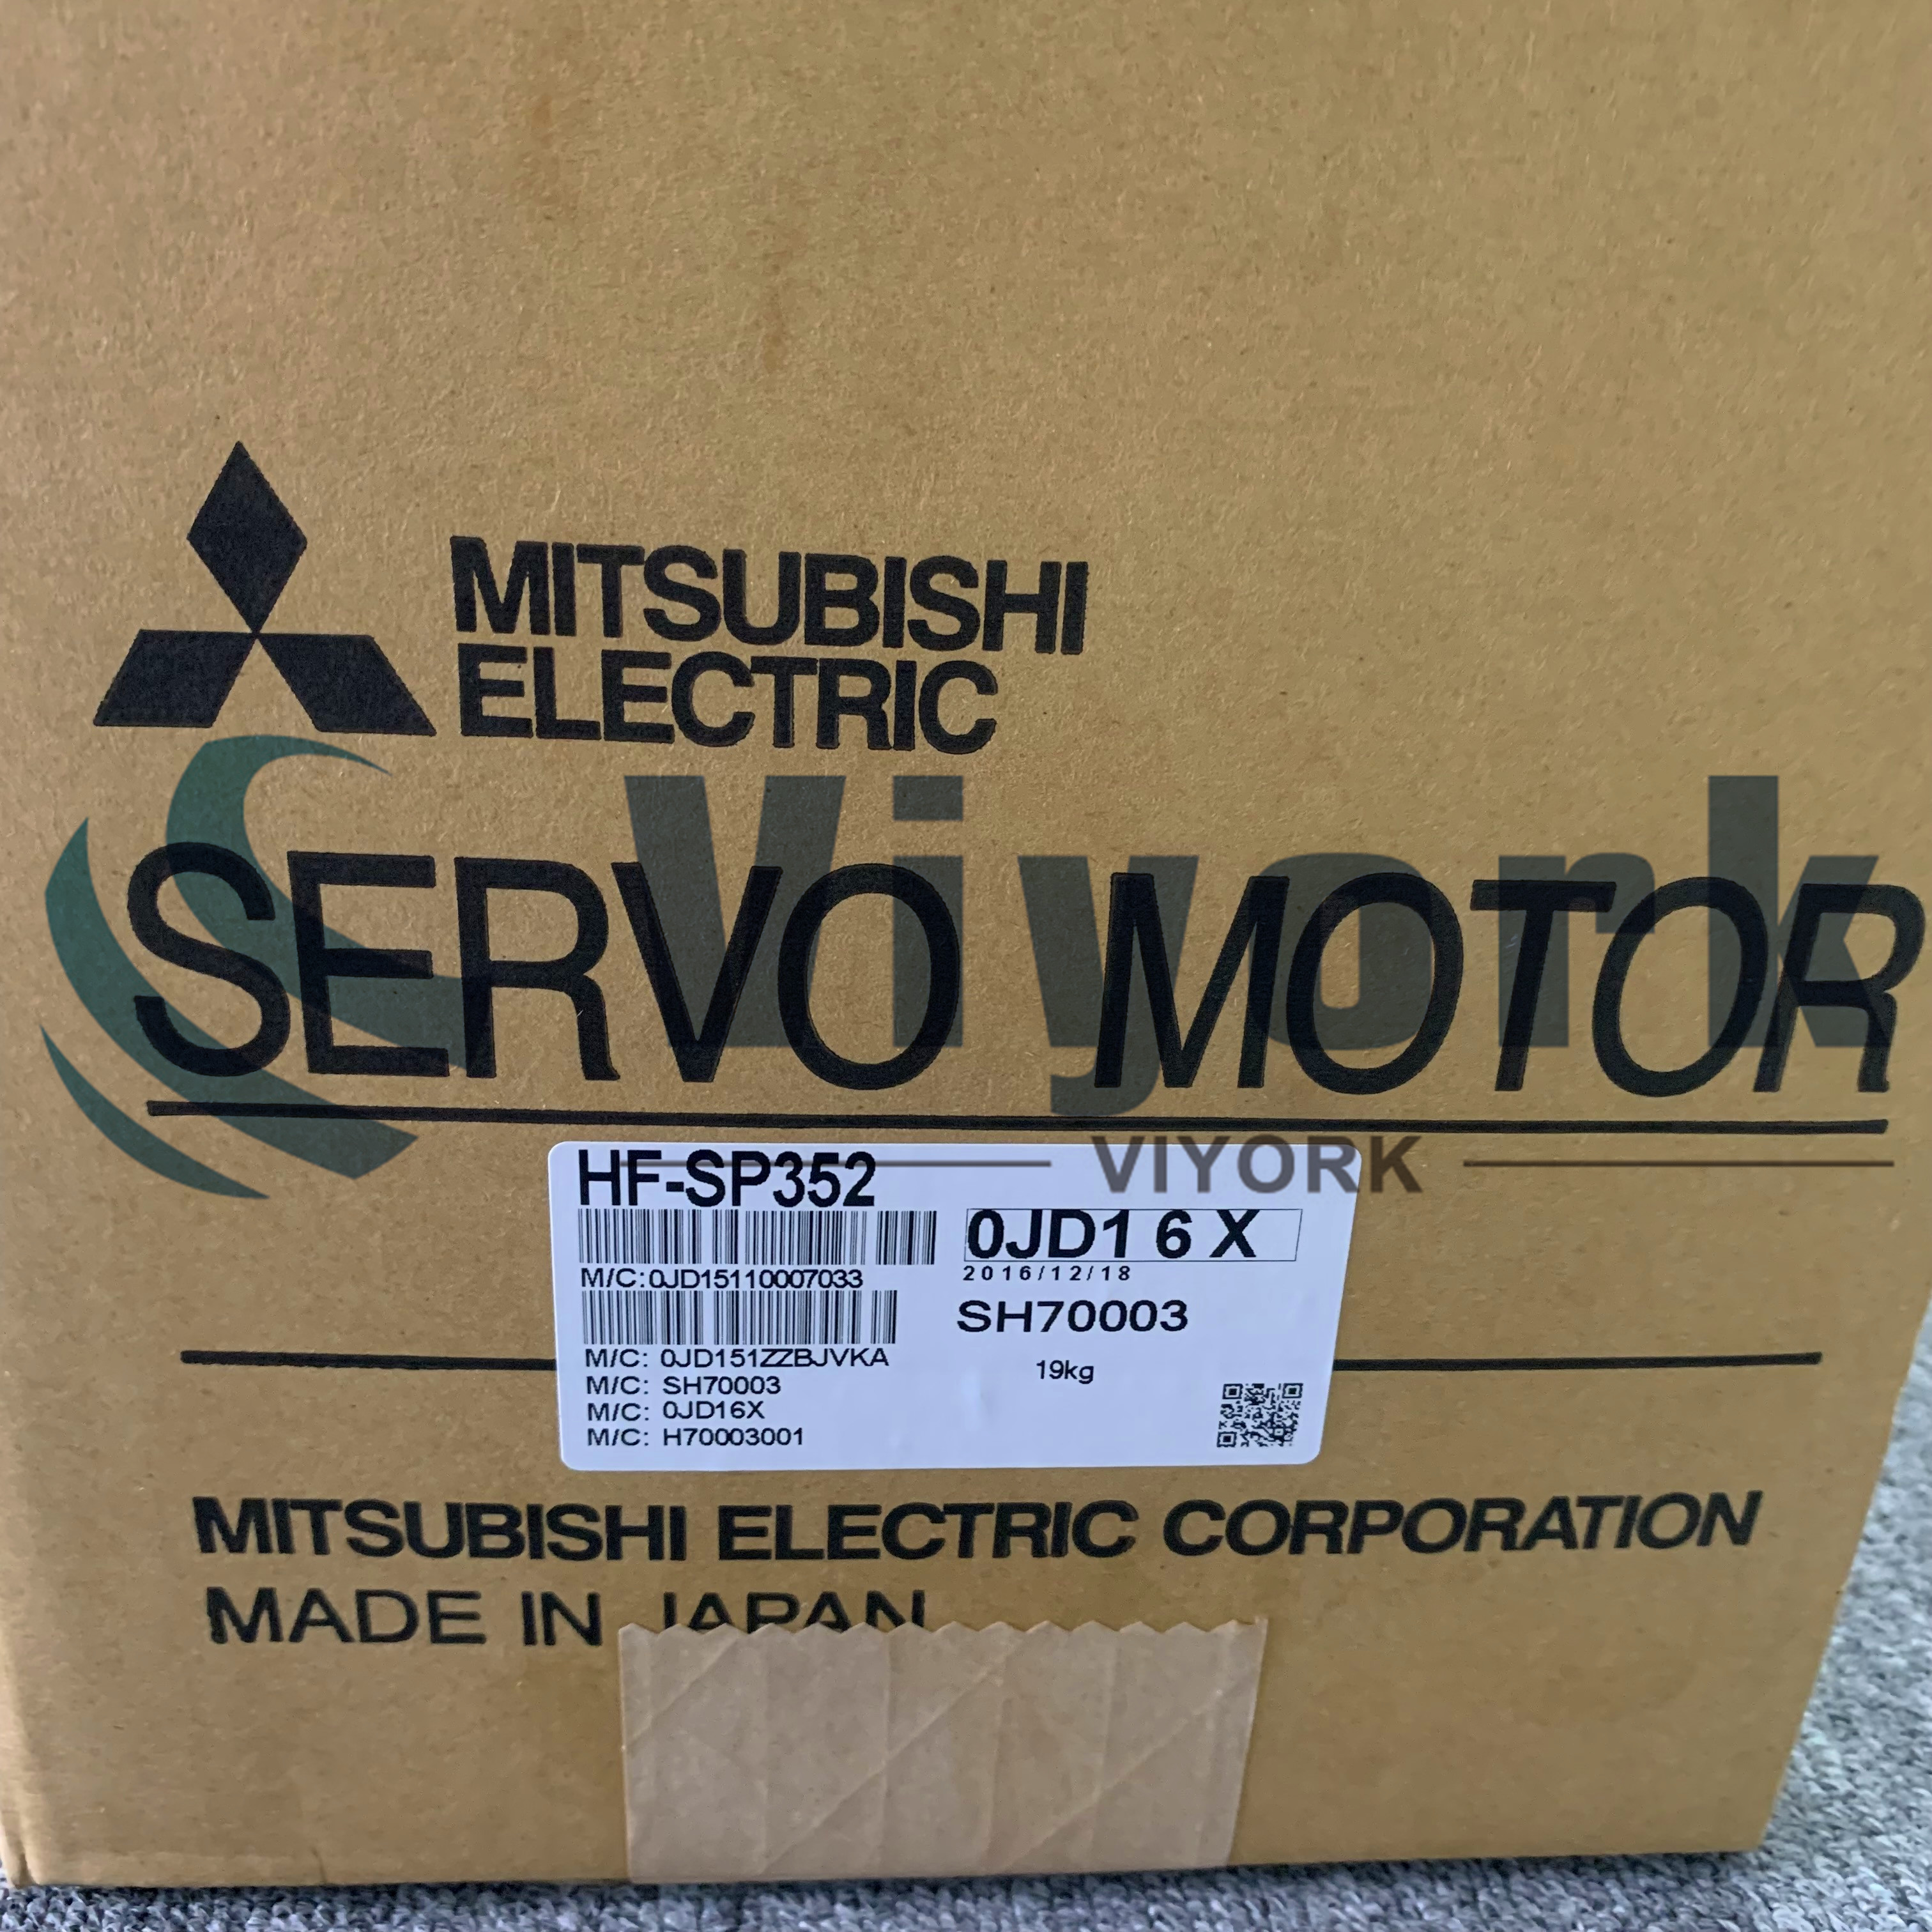 Mitsubishi HF-SP352 AC SERVO MOTOR HF SERIES 3.5KW 2000RPM 200-230V NEW